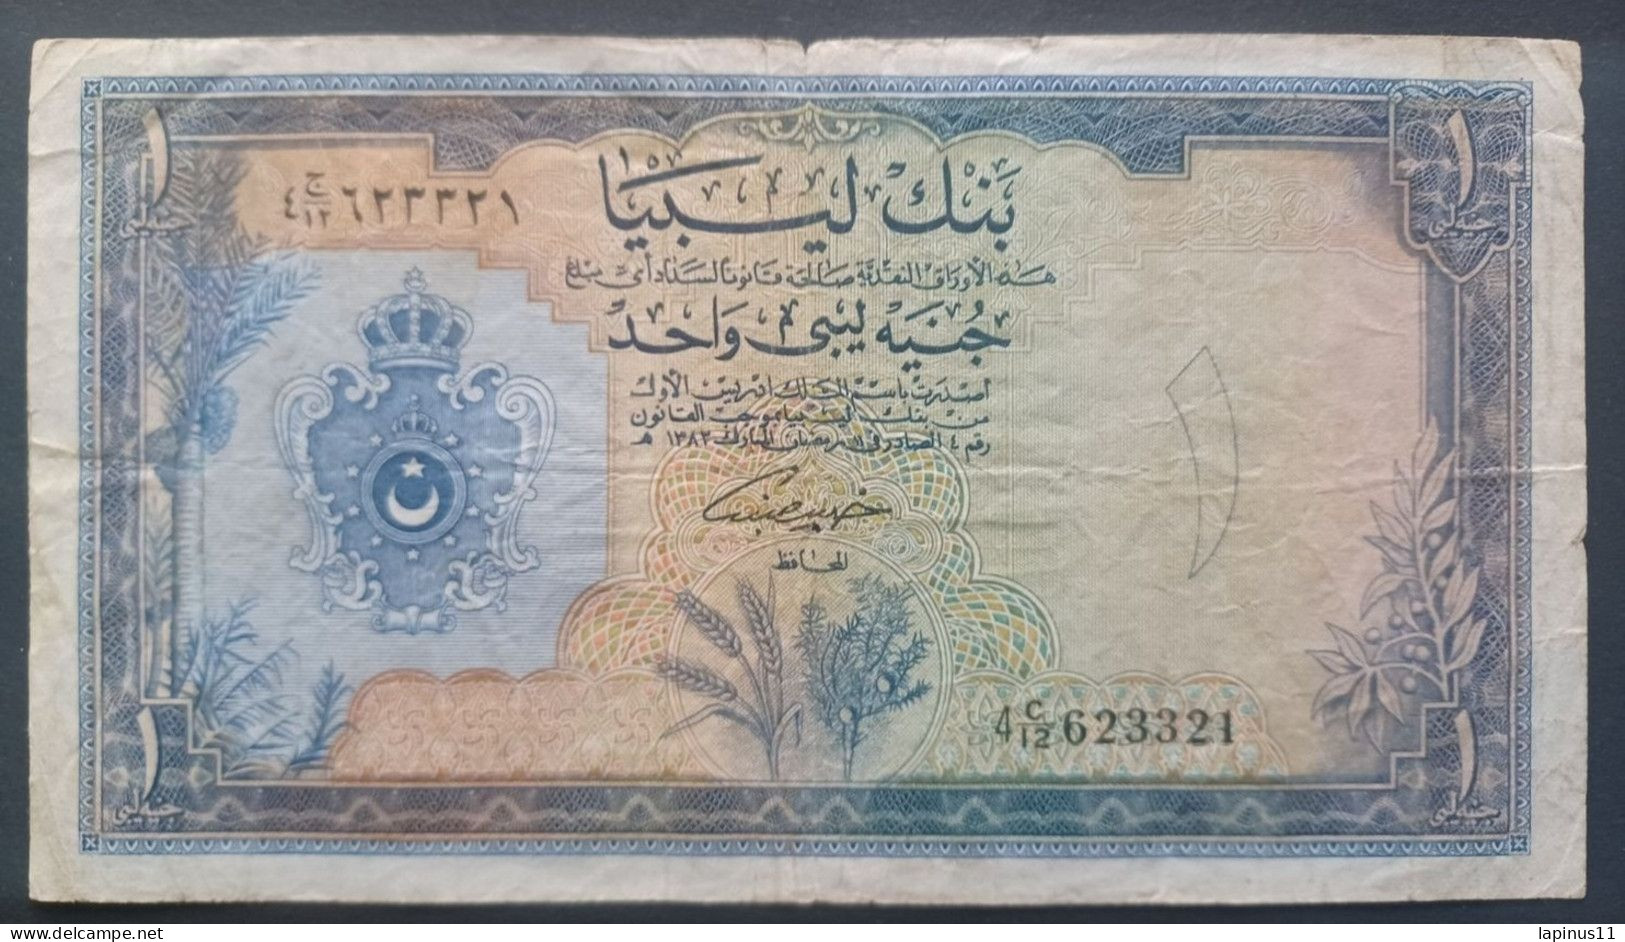 BANKNOTE LIBYA LIBIA 1 POUND 1963 VERY RARE CIRCULATED - Libia